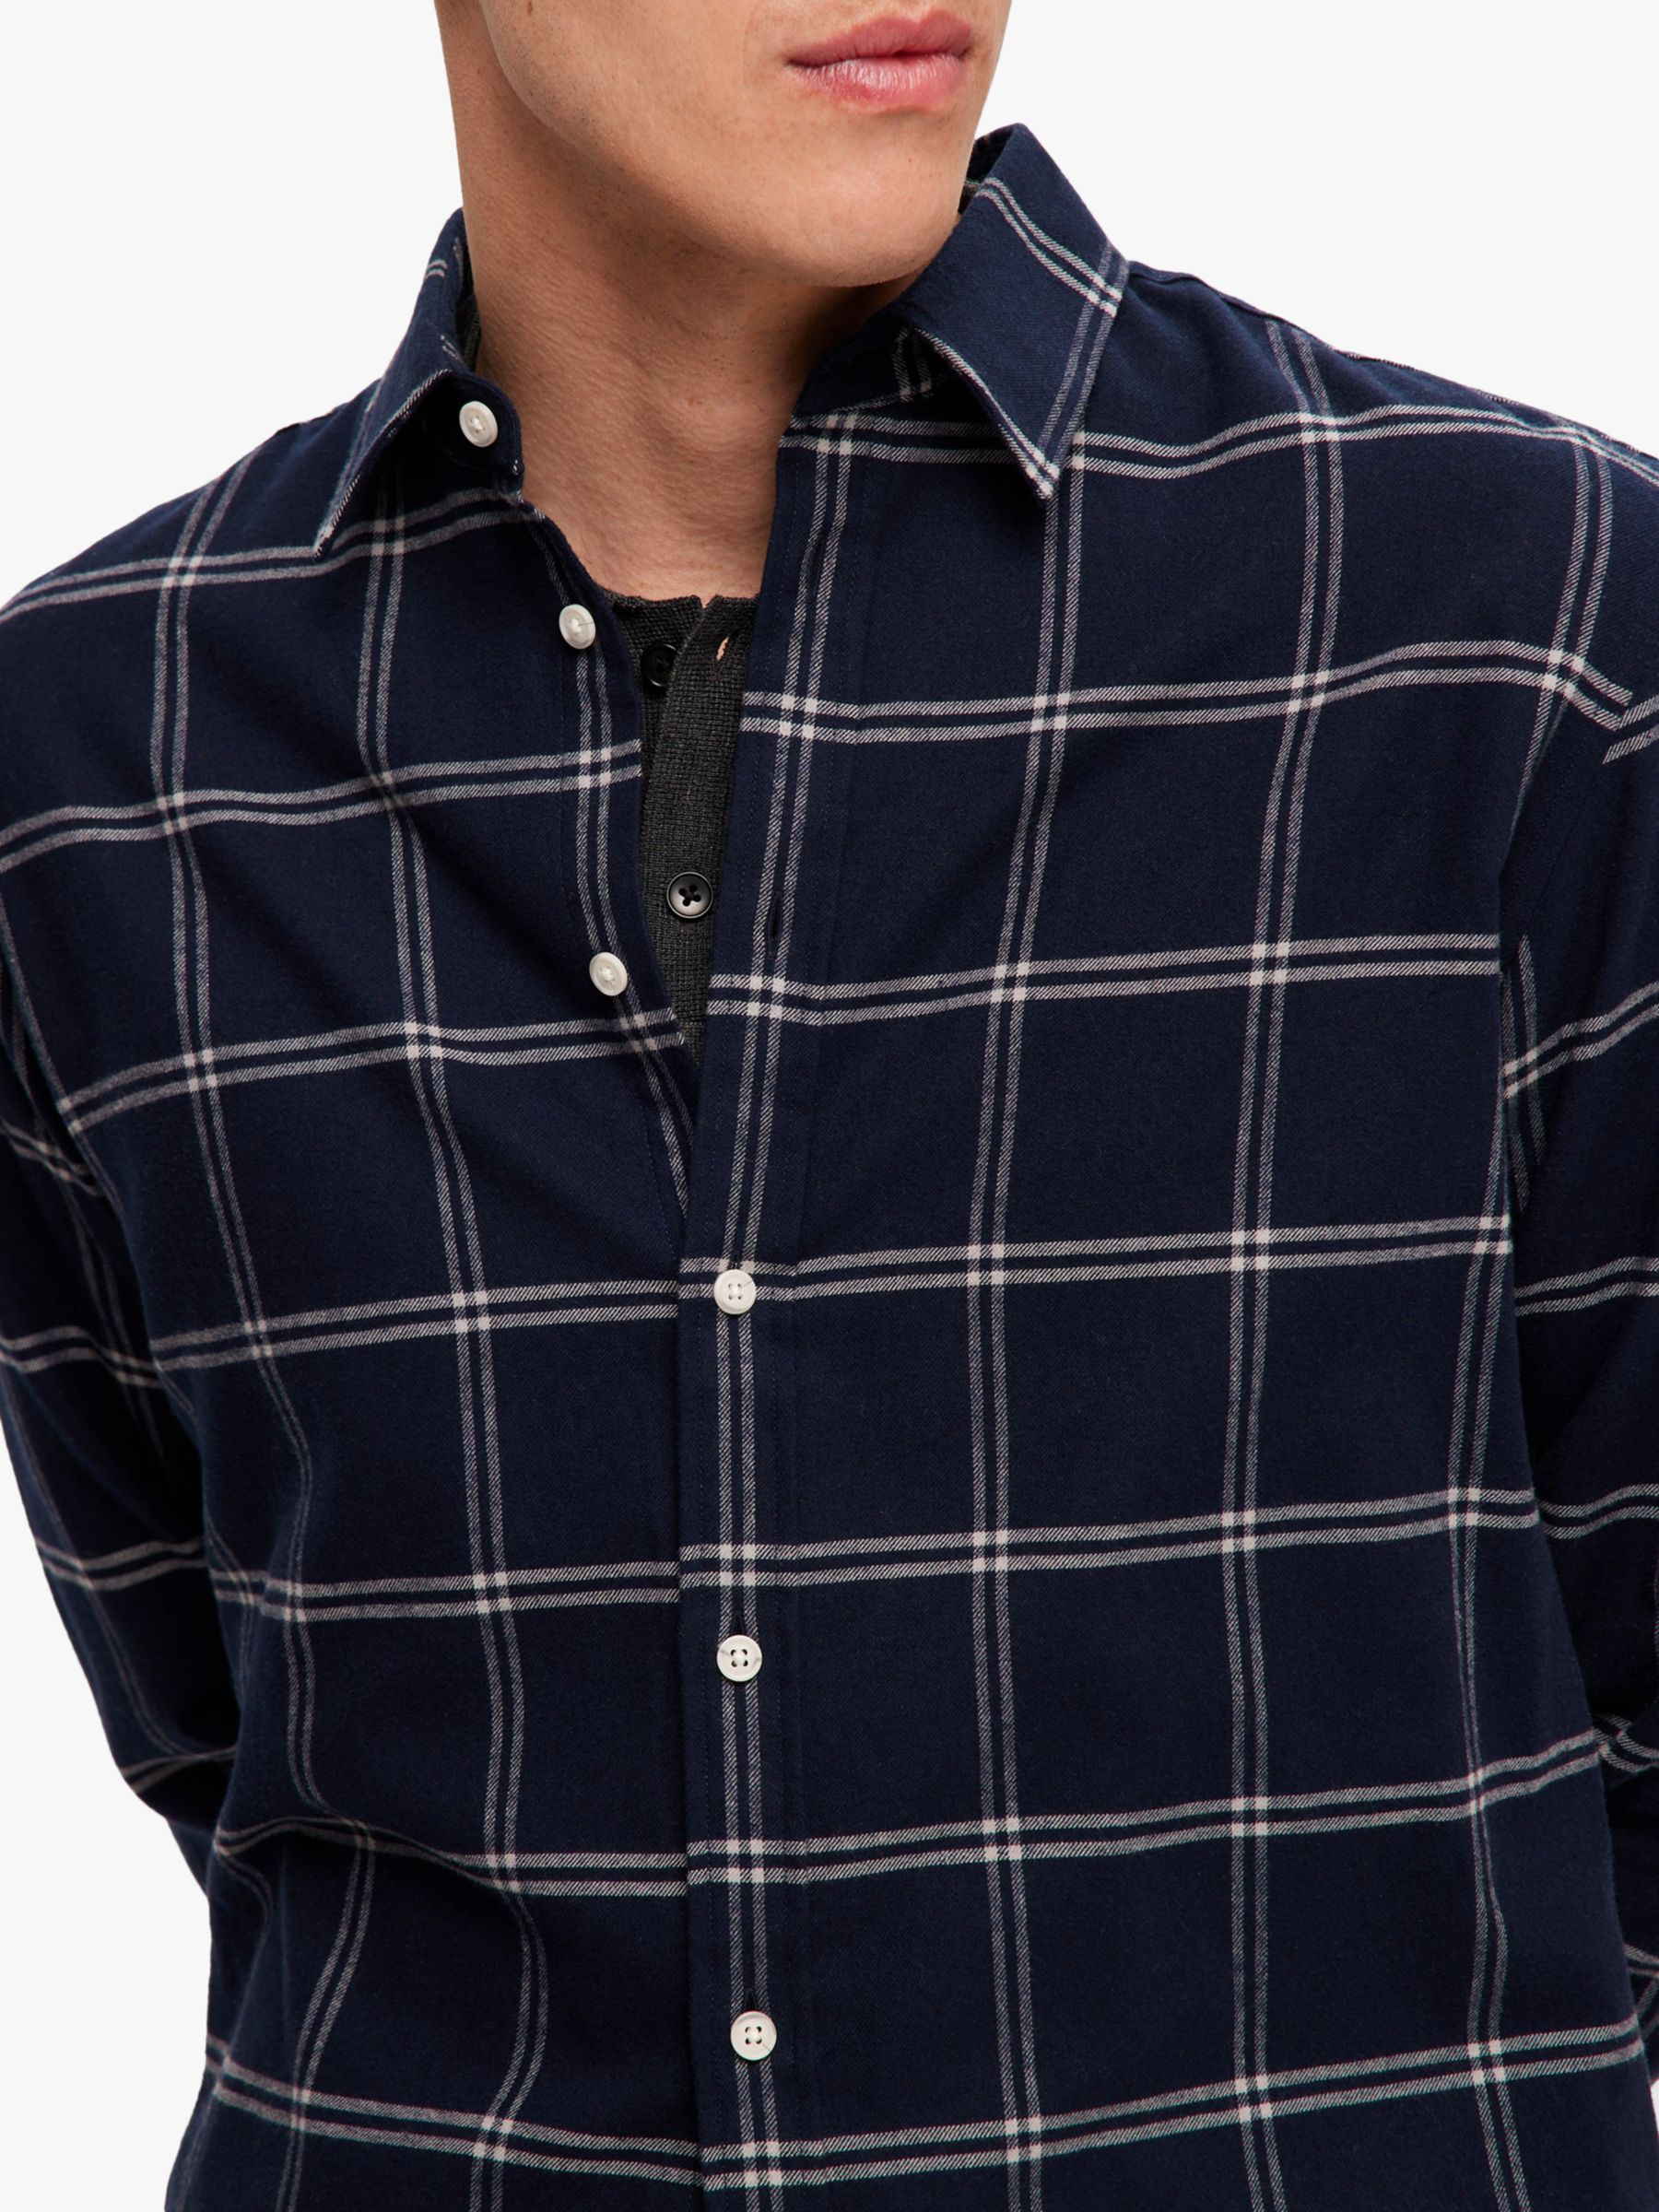 SELECTED HOMME Cotton Flannel Shirt Copied, Blue/Multi, M